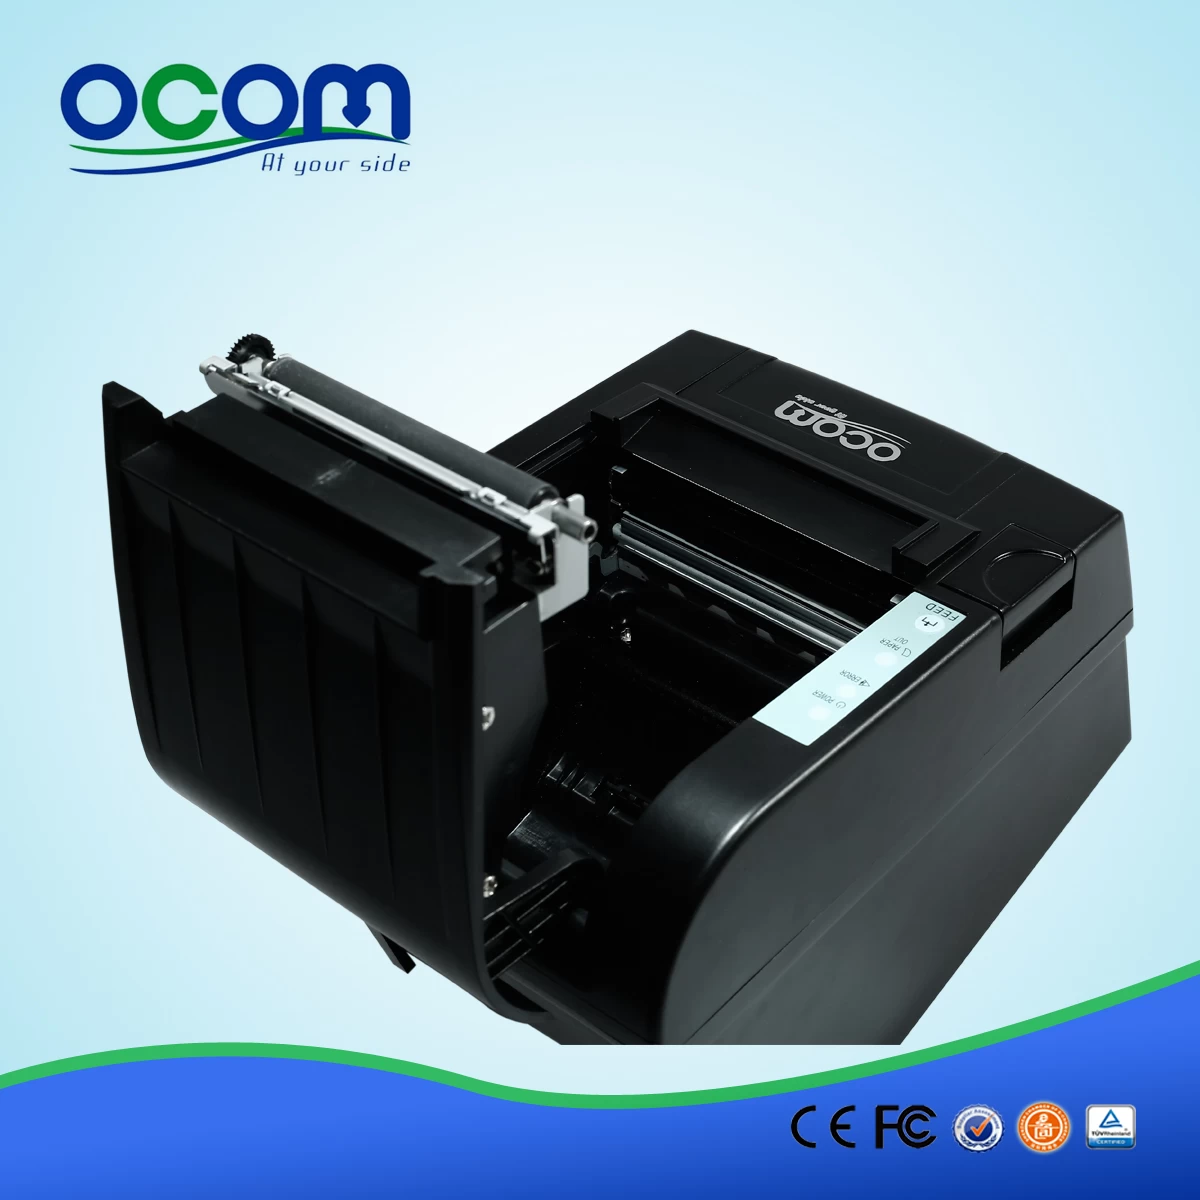 80mm Wifi Thermal Receipt Printer OCPP-806-W